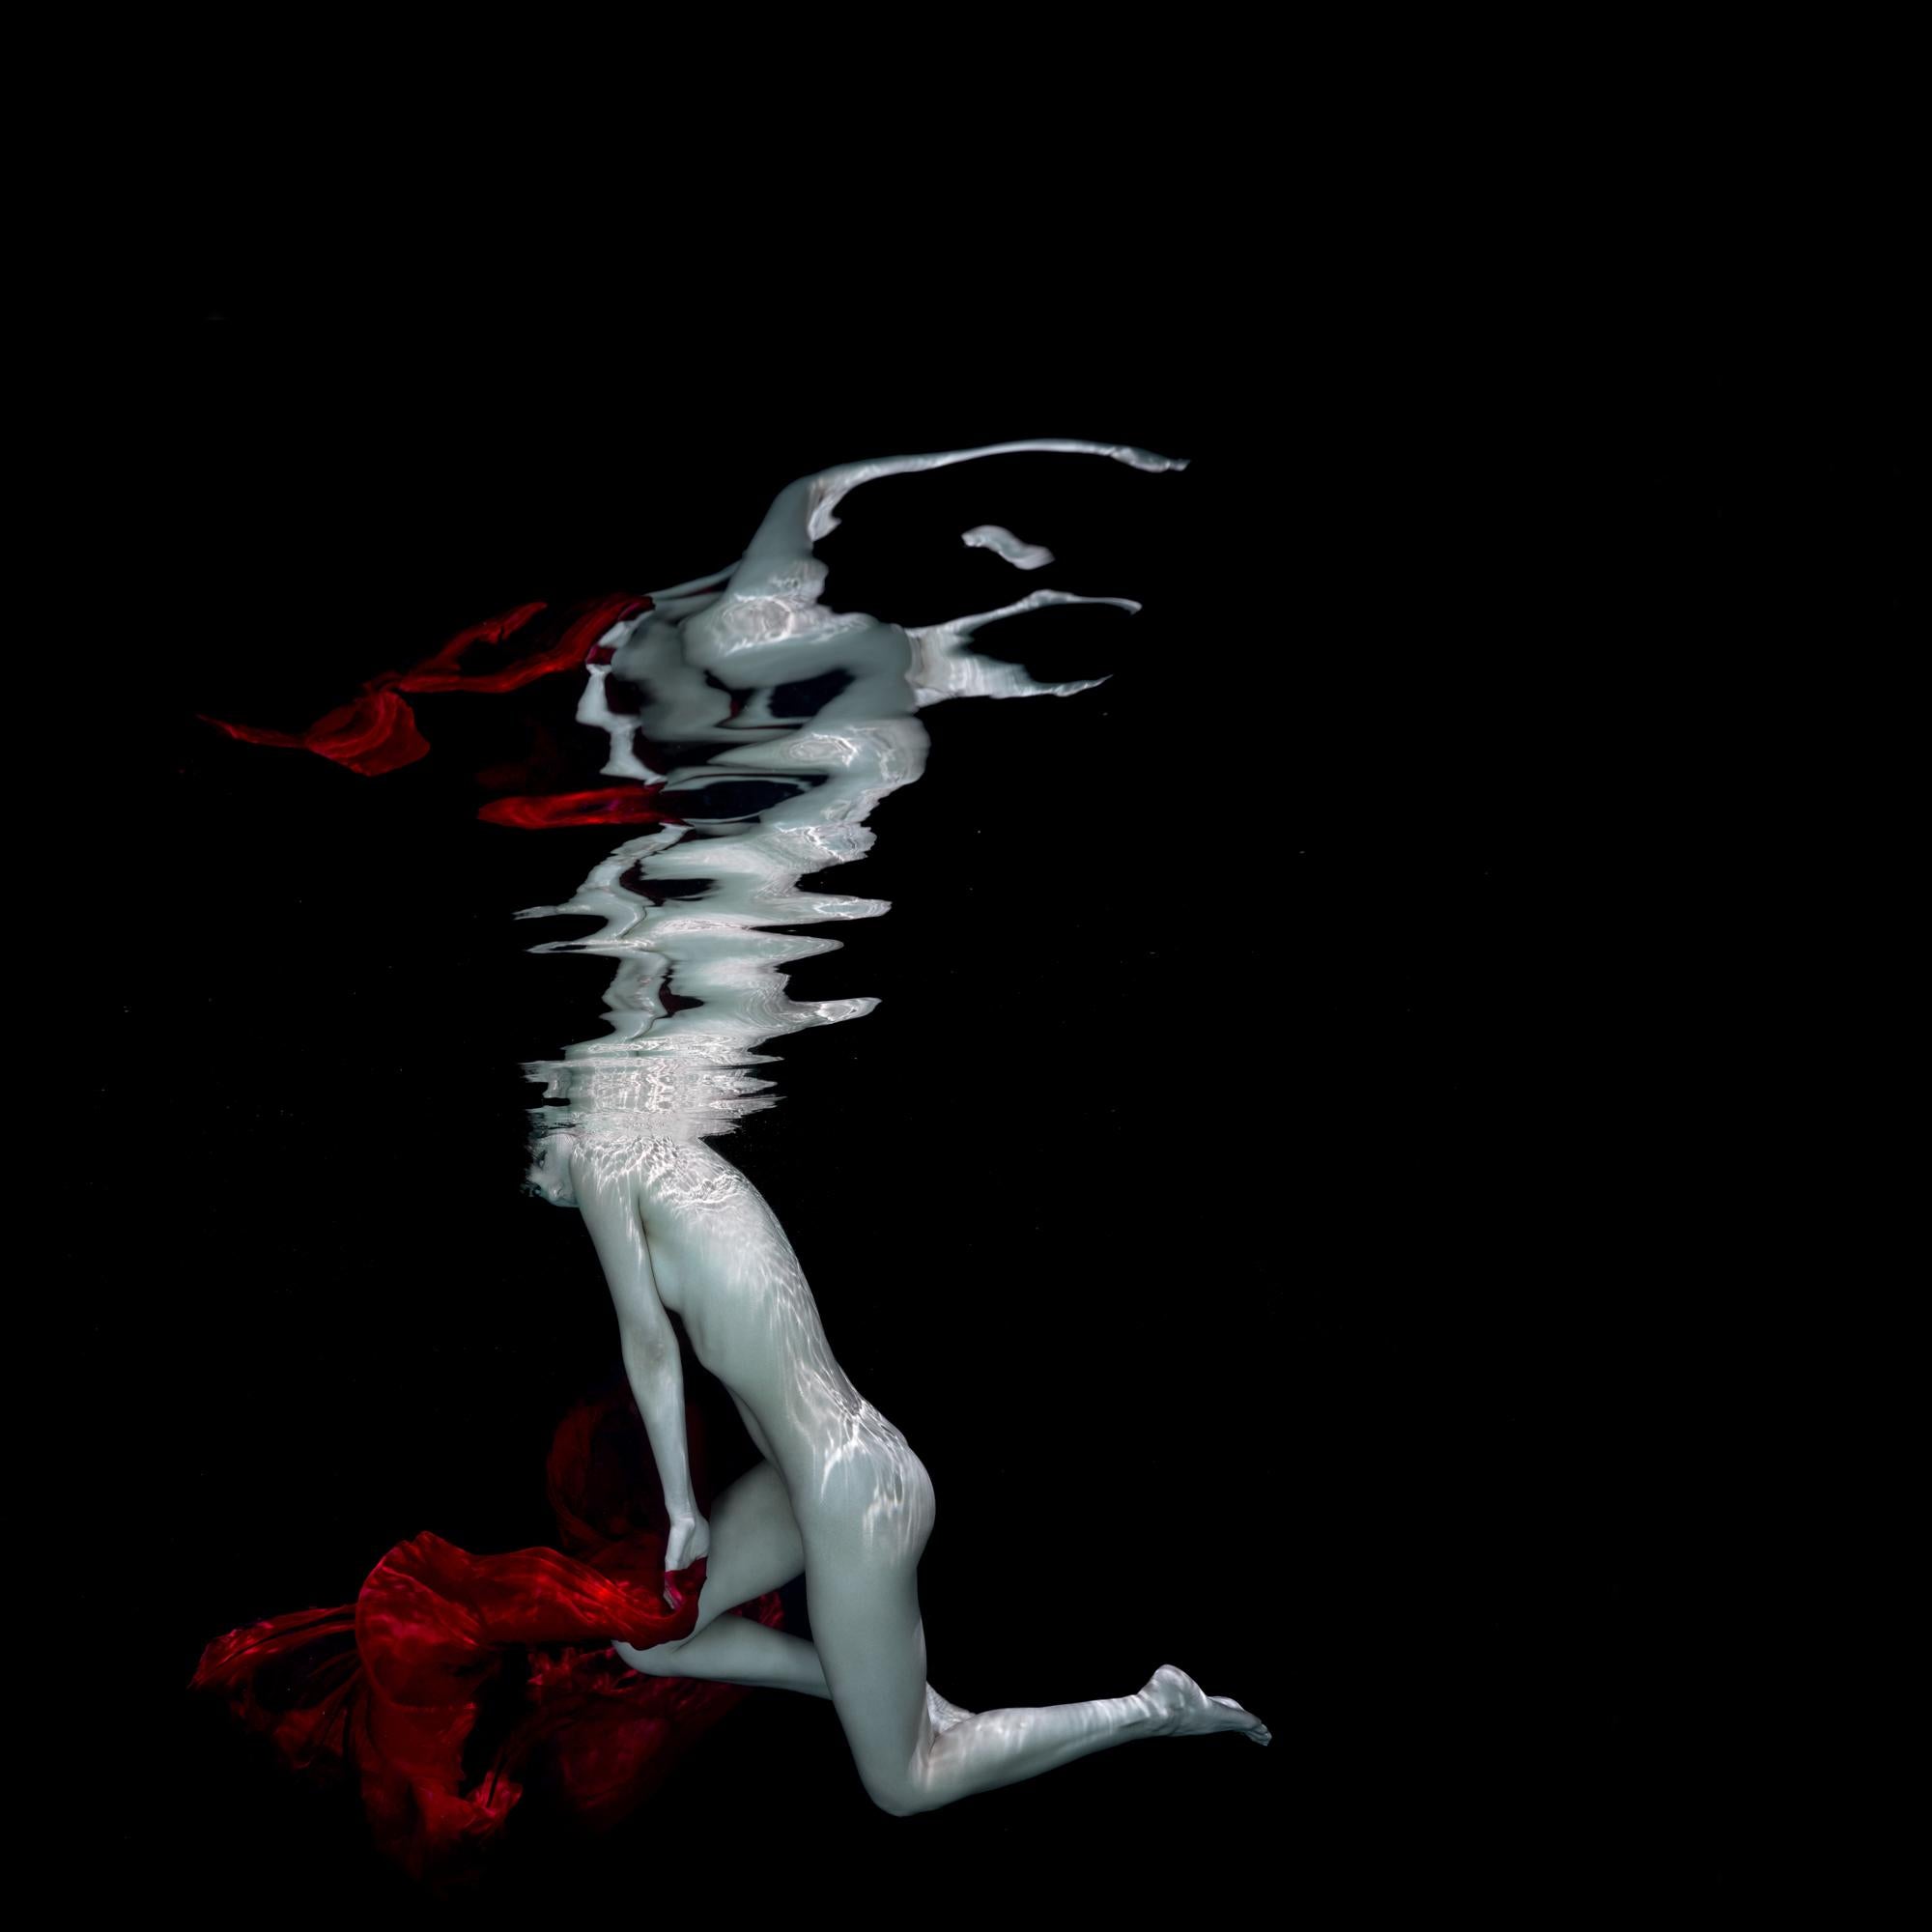 Alex Sher Nude Photograph – Carmen – Aktfotografie unter Wasser – Druck auf Aluminium 40" x 40""